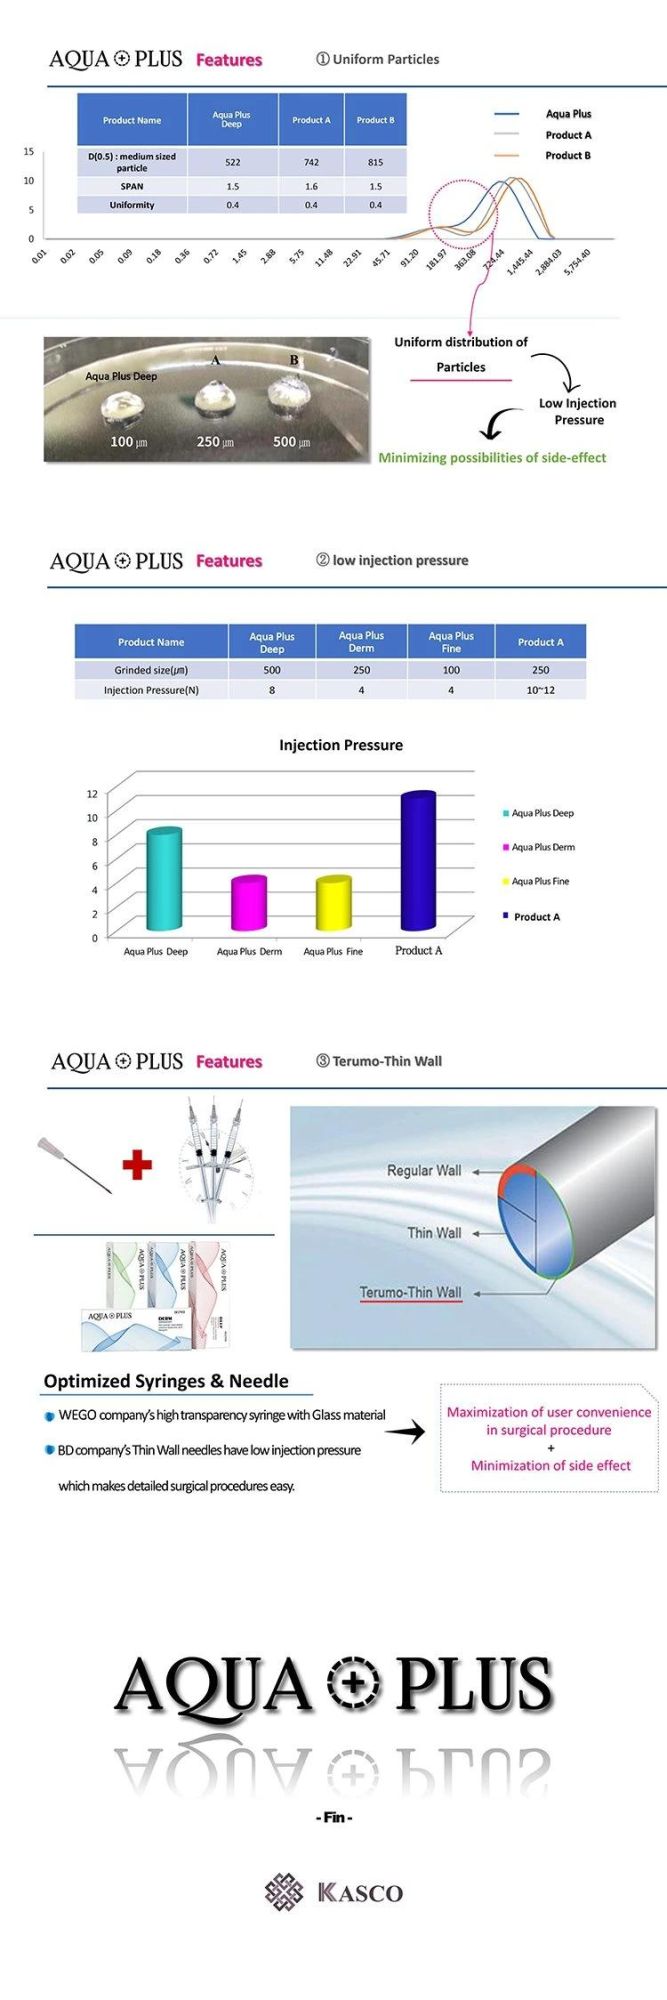 Aqua Plus Acid Hyaluronic Breast Filler Injection /High Quality Hyaluronic Acid Injection Dermal Filler